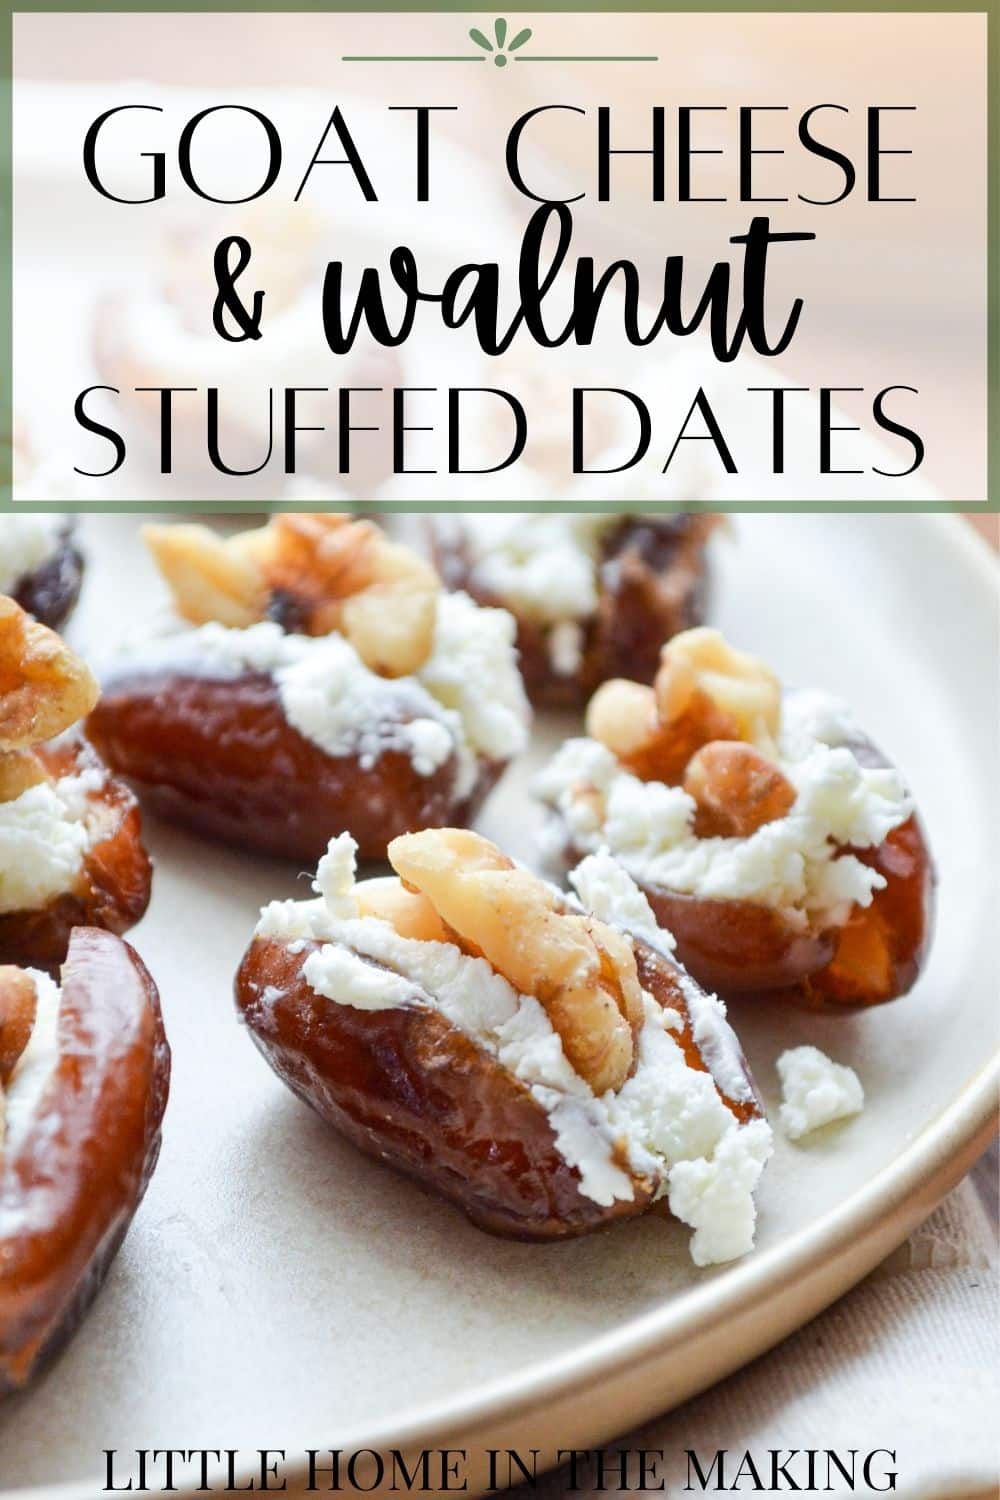 Goat cheese and walnut stuffed dates